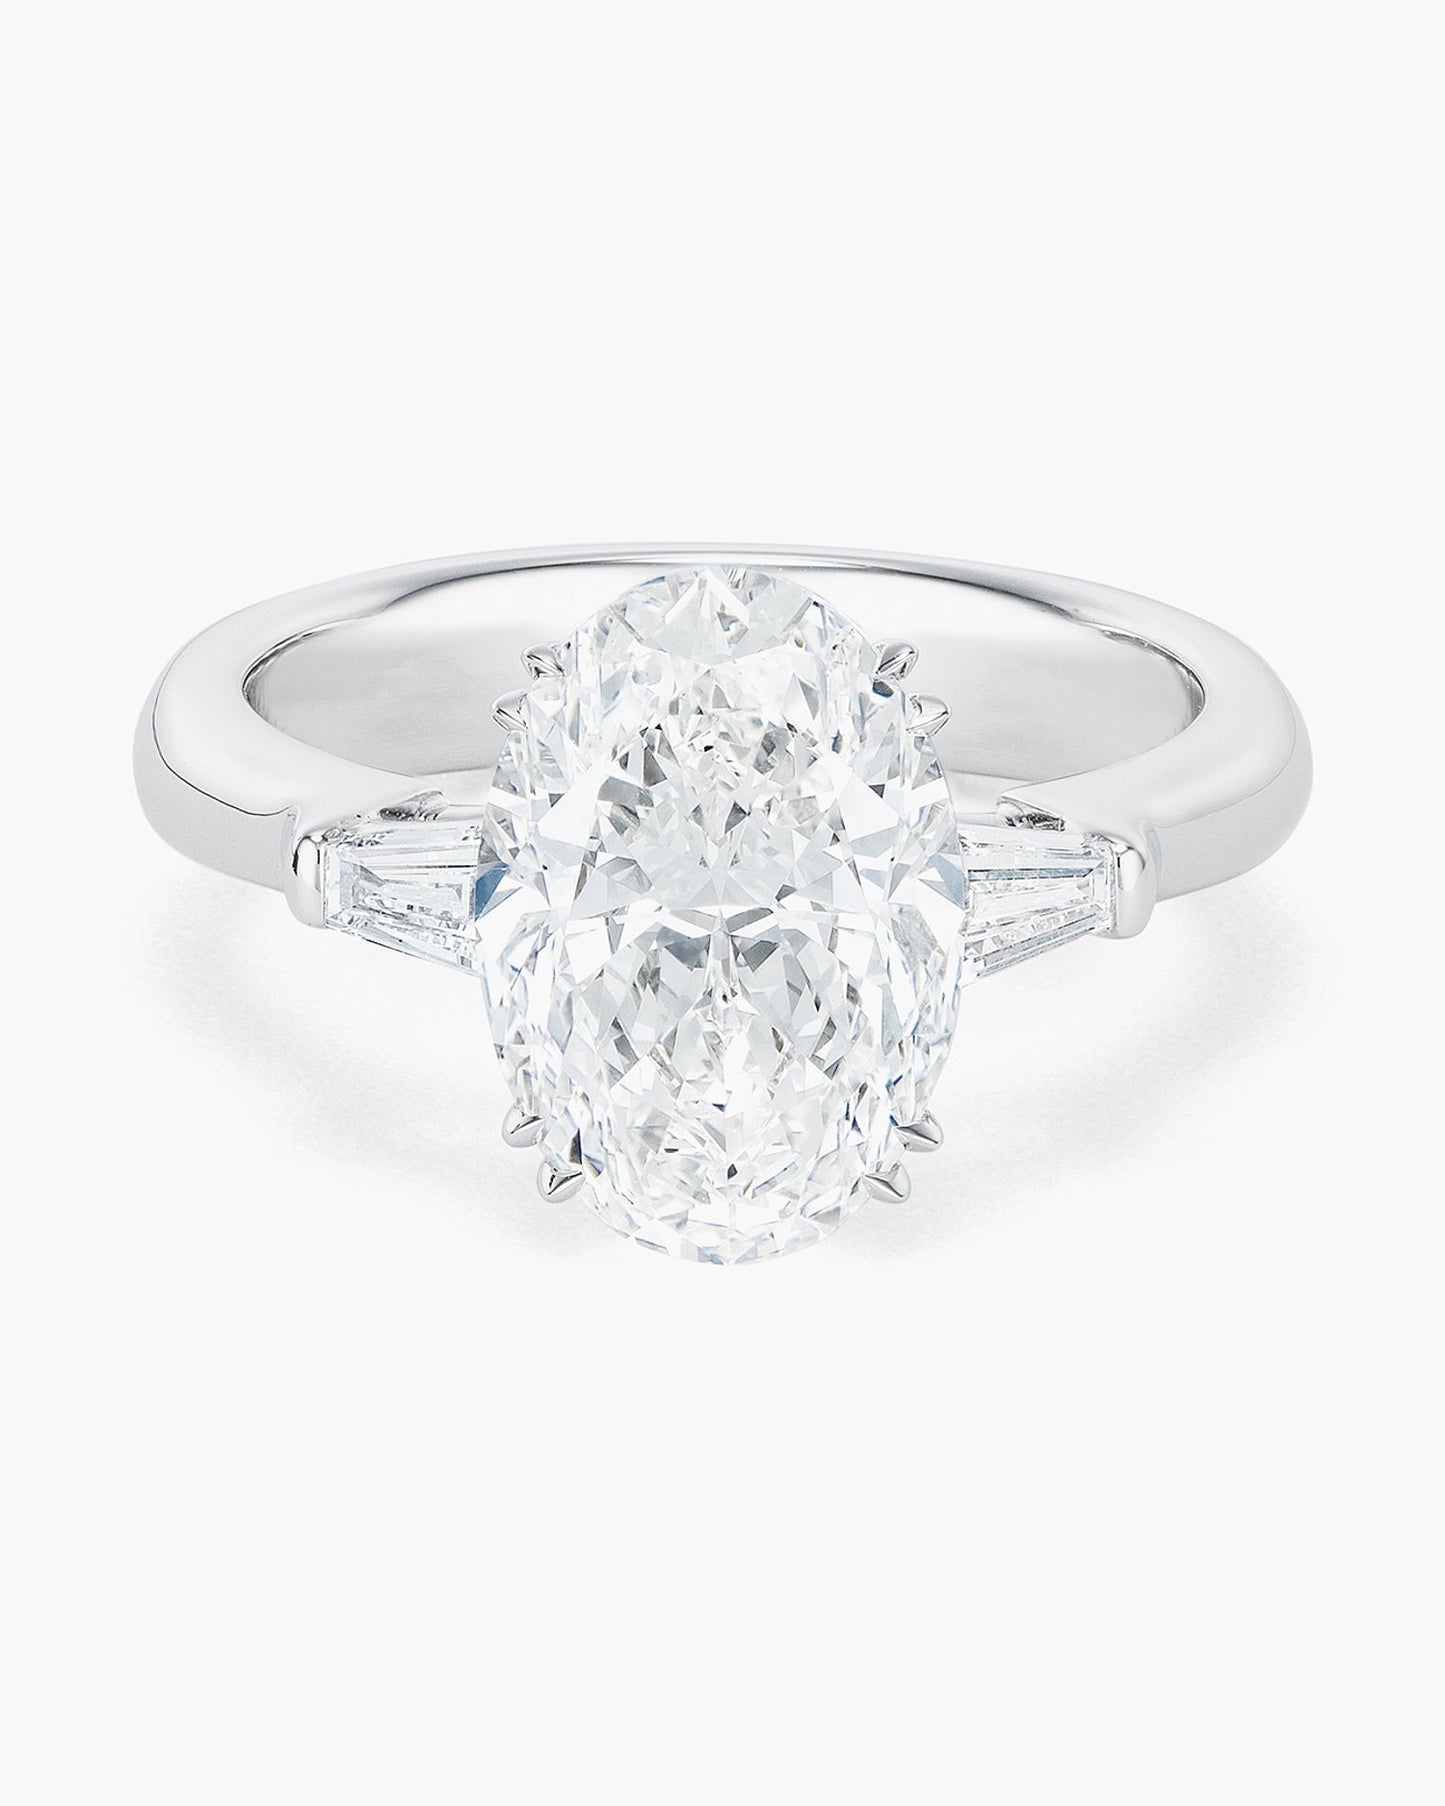 3.16 carat Oval Shape Diamond Ring